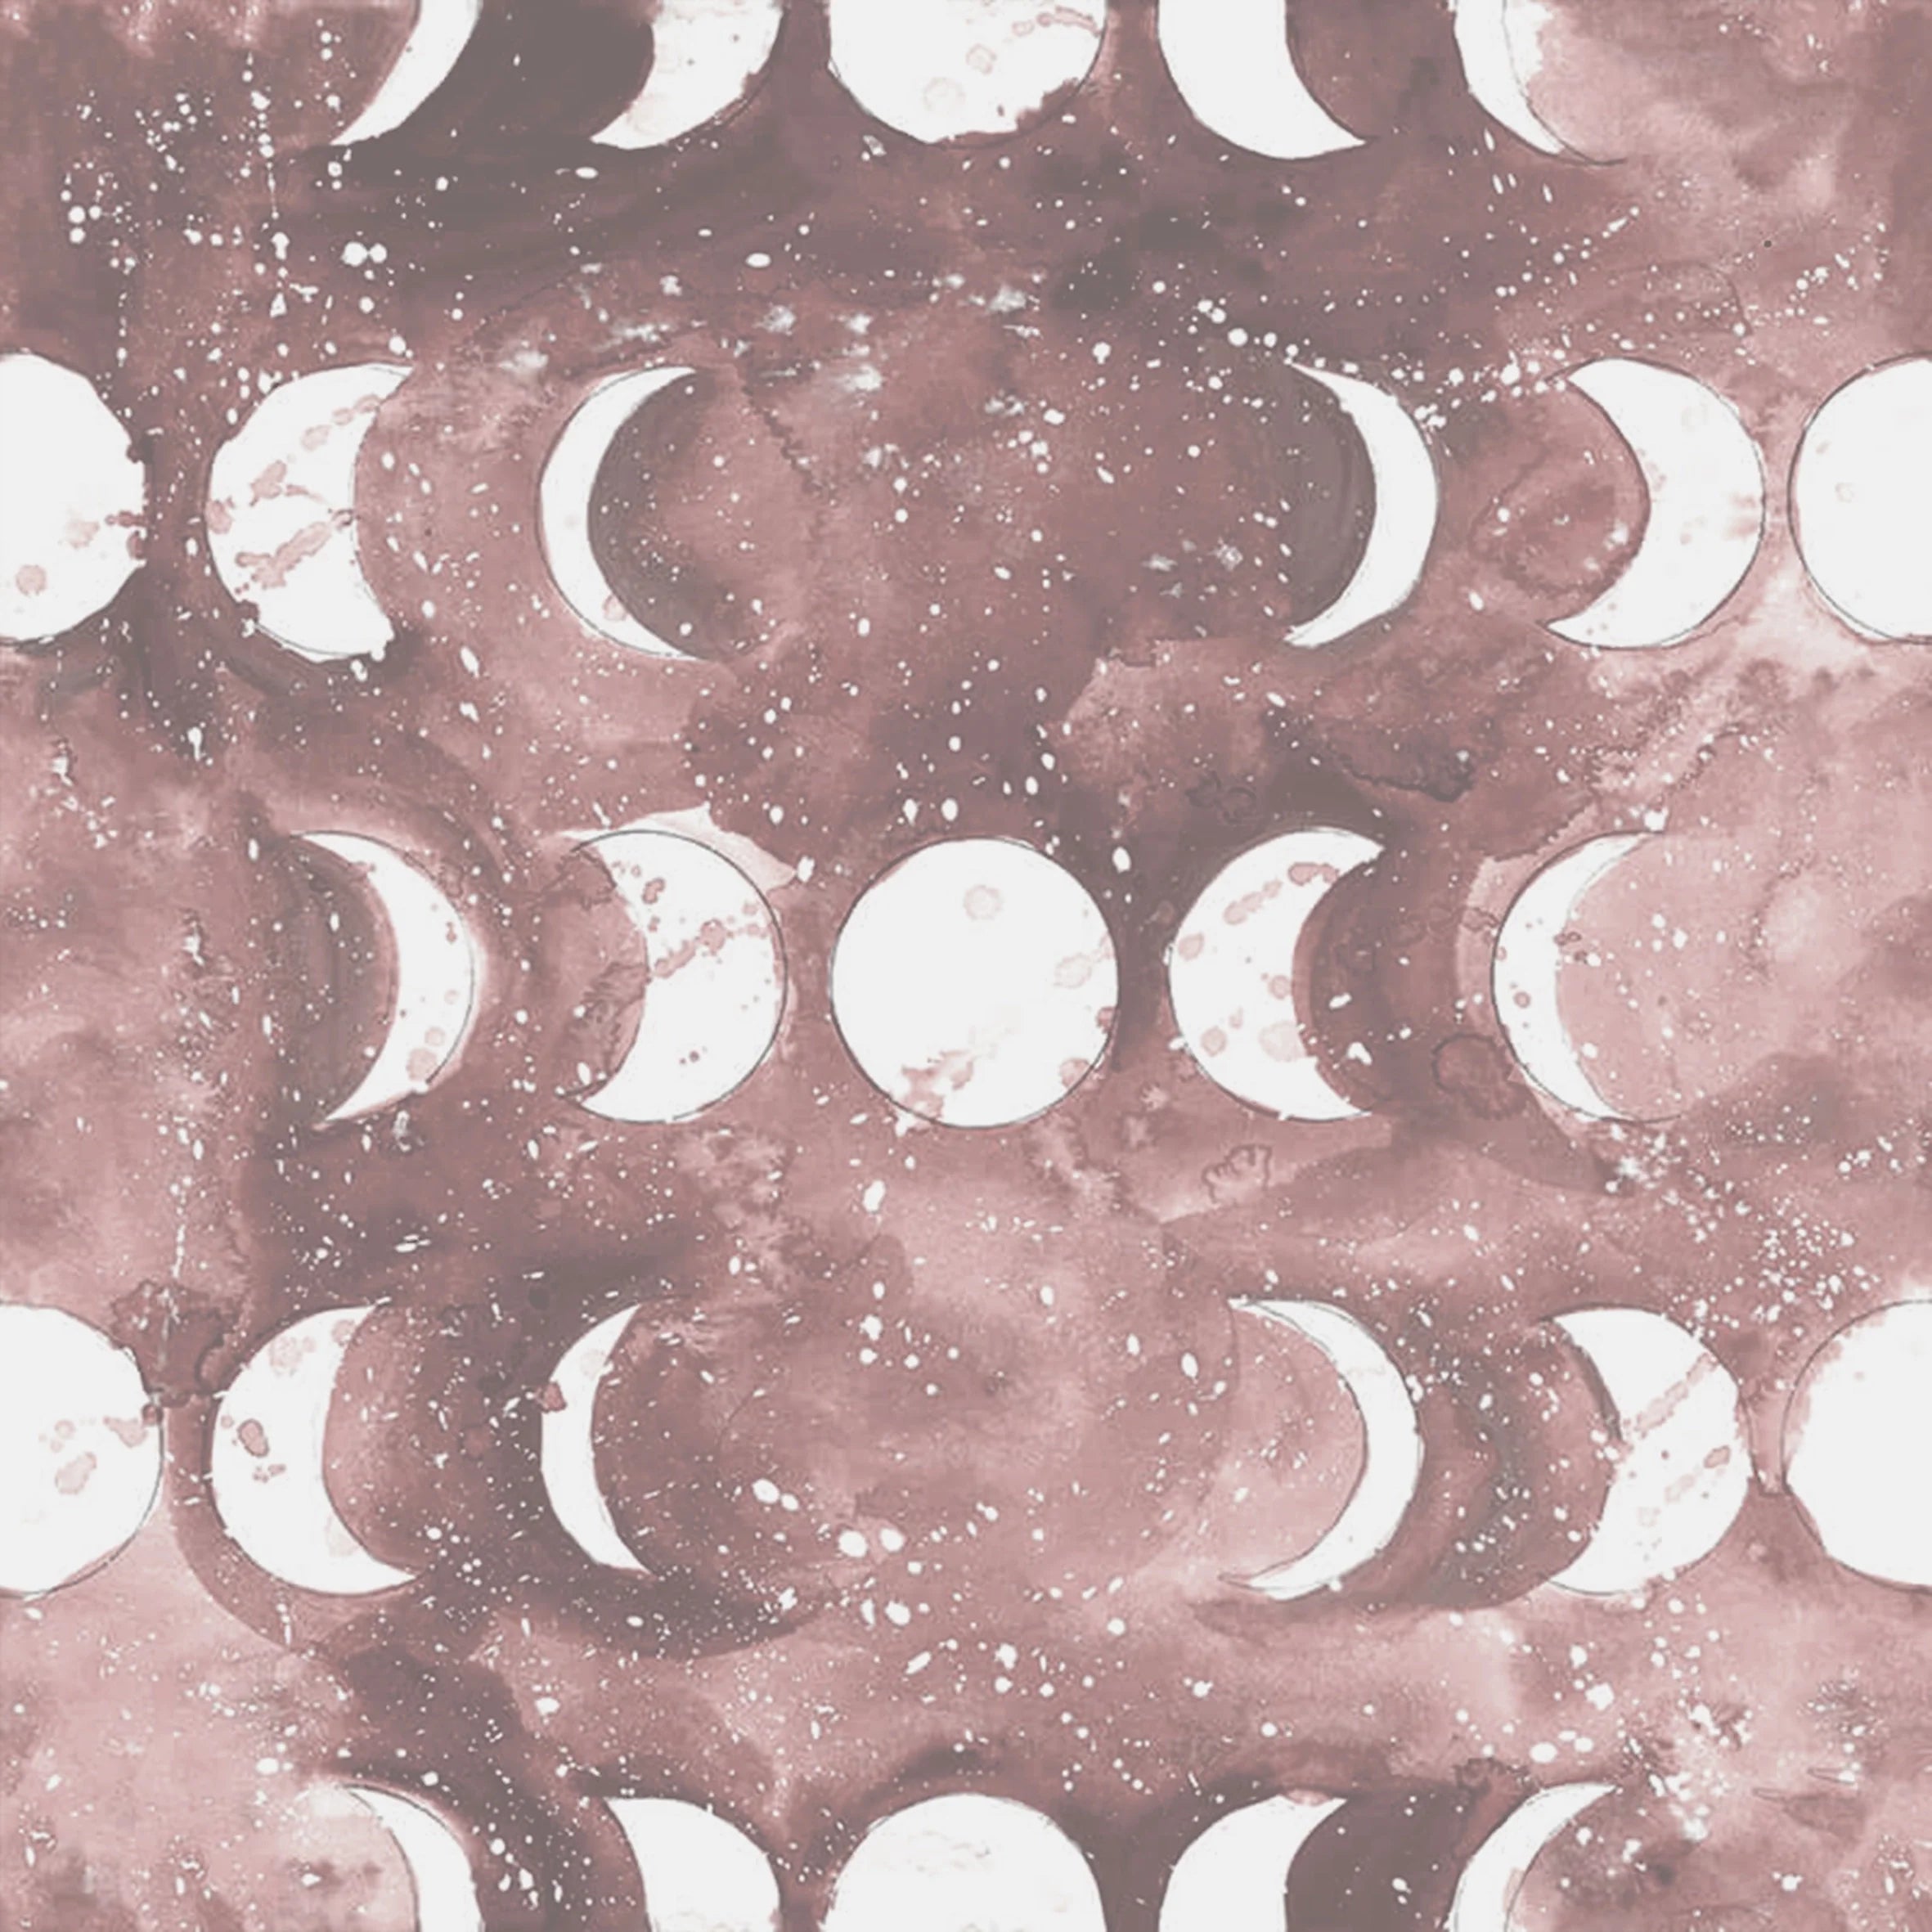 Antler Moon Picnic Mat